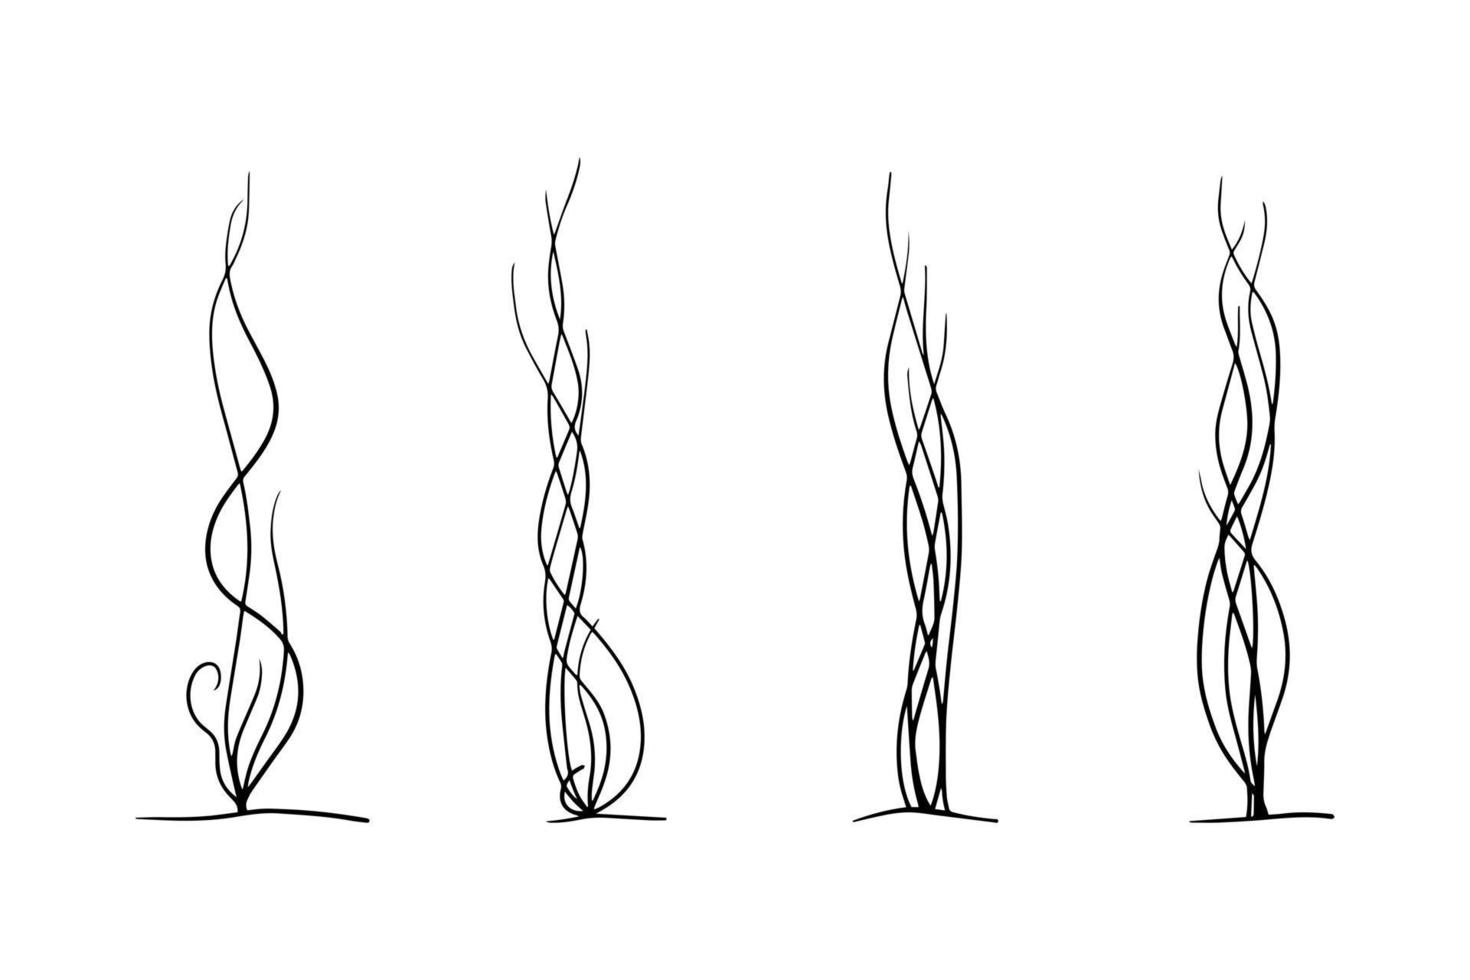 Smoke or Scent Steam Line Icon Set. Vector illustration